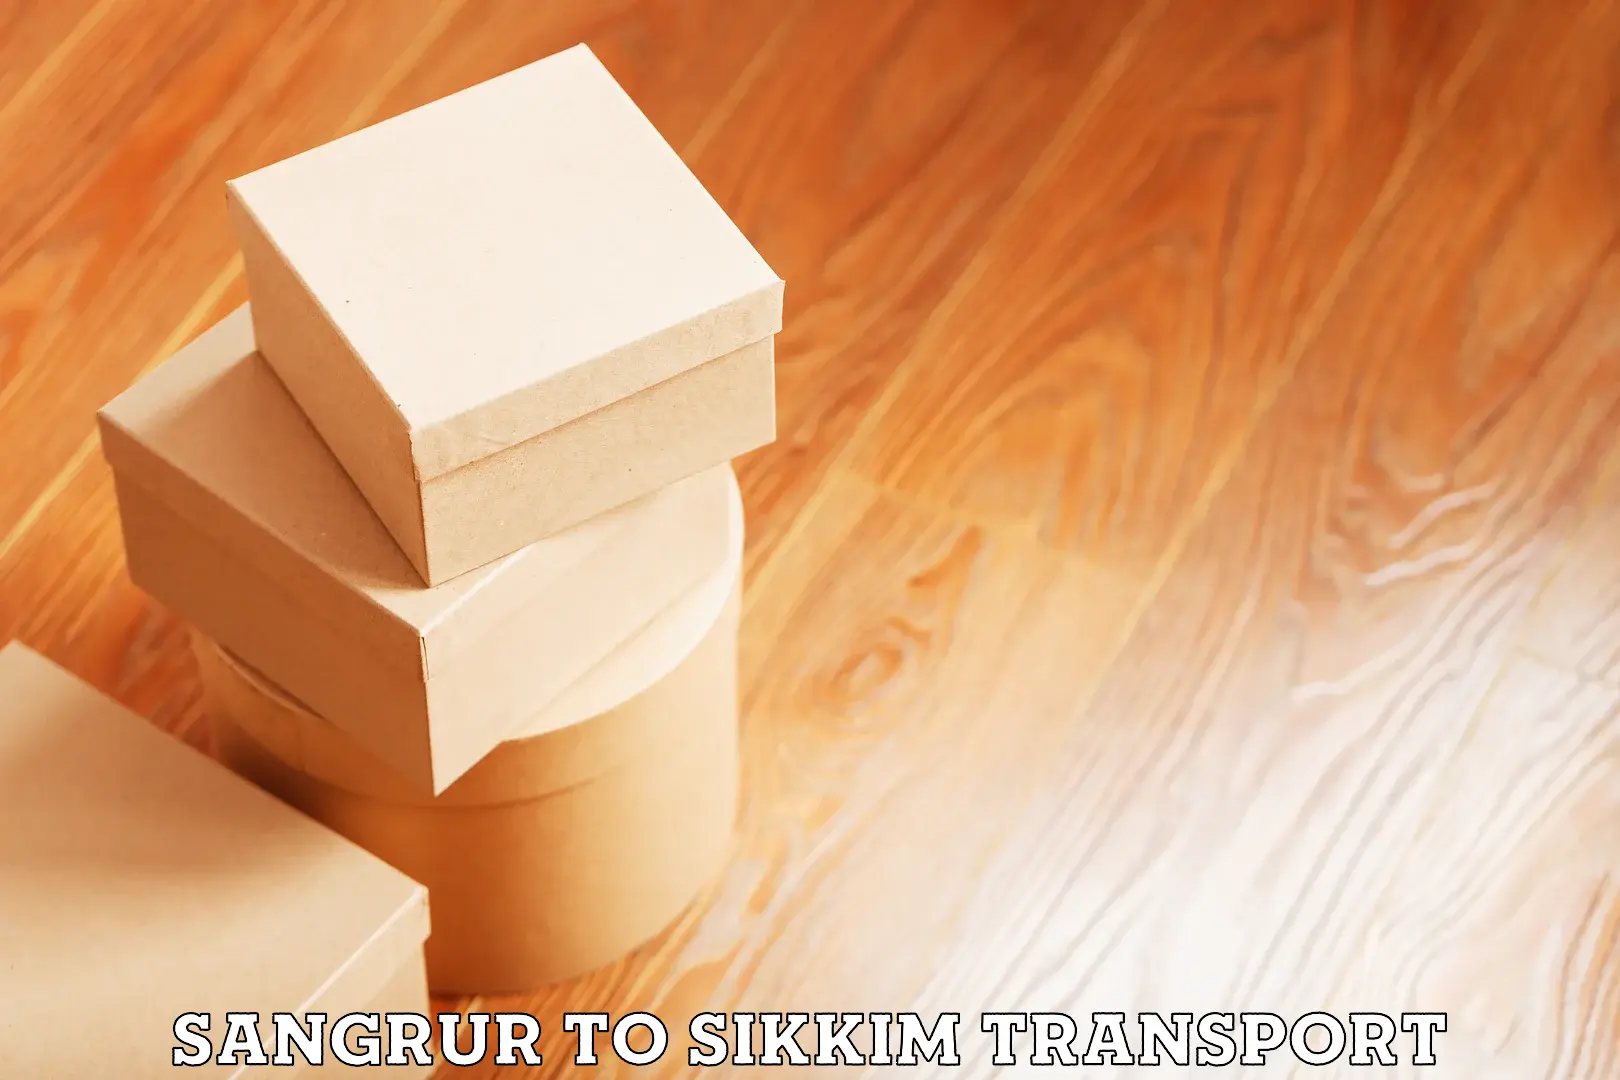 Online transport service Sangrur to Gangtok